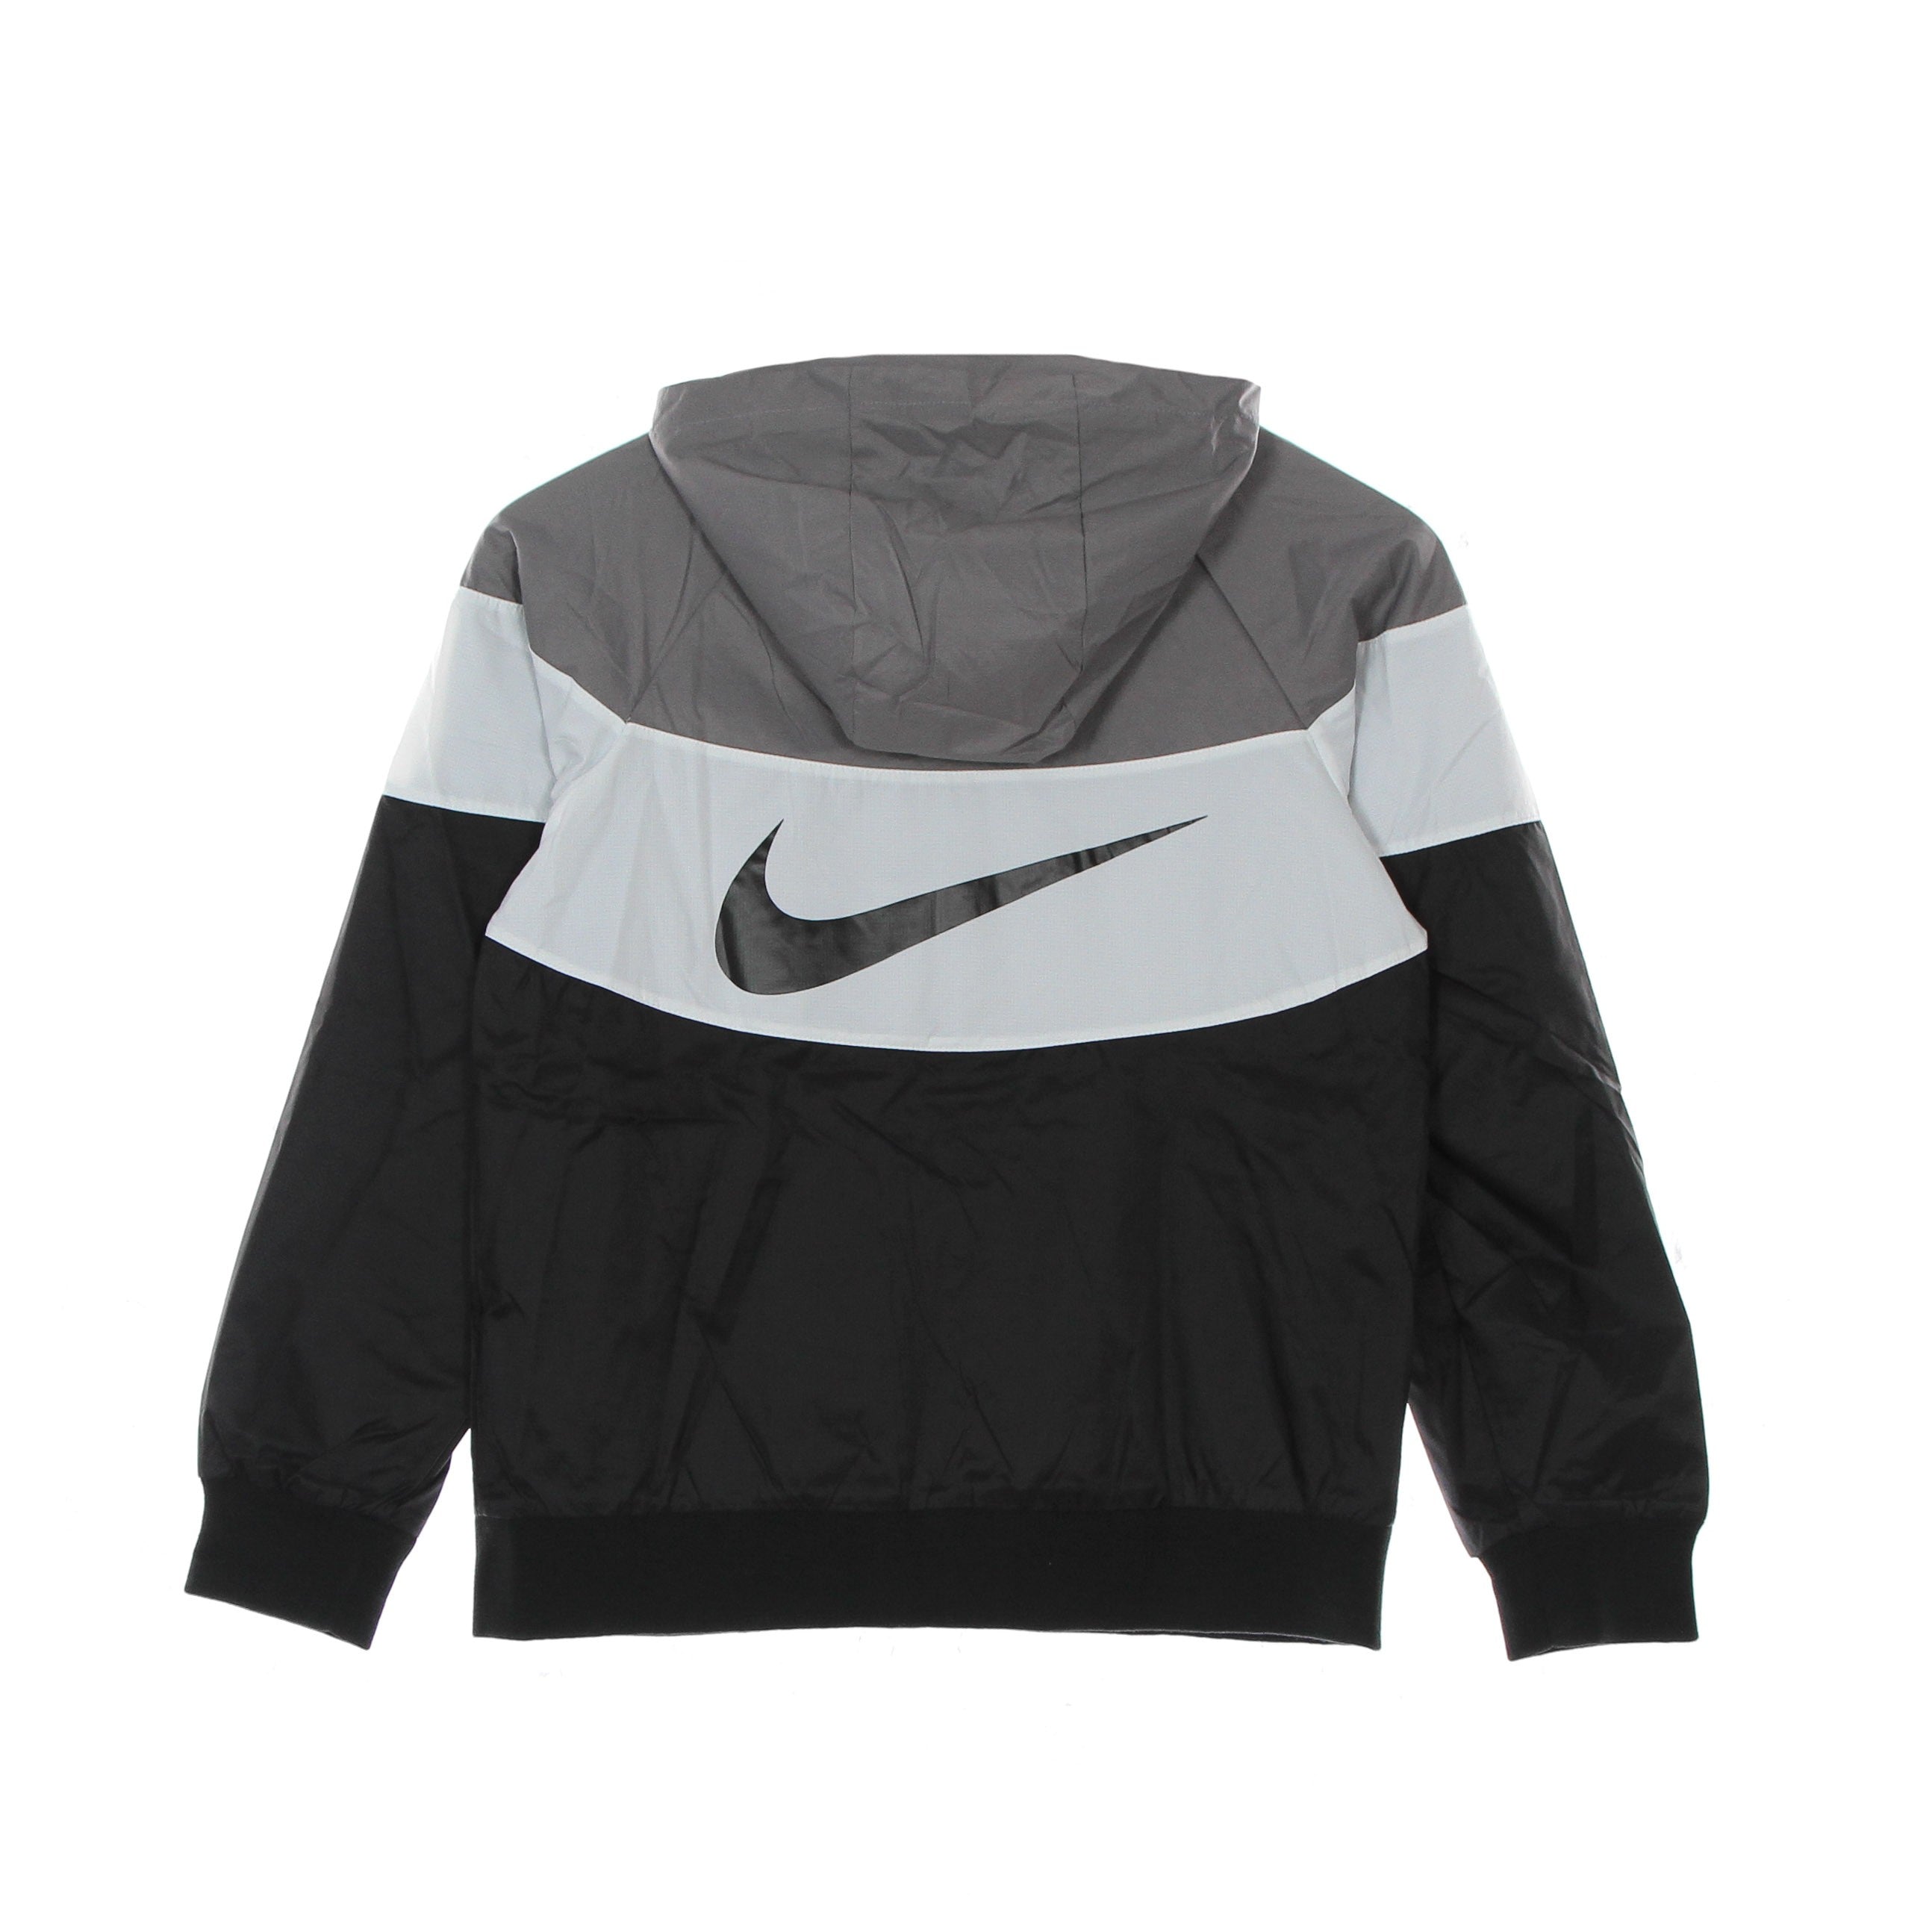 Nike, Giacca A Vento Ragazzo Windrunner Jacket Hd Gx Qs, 